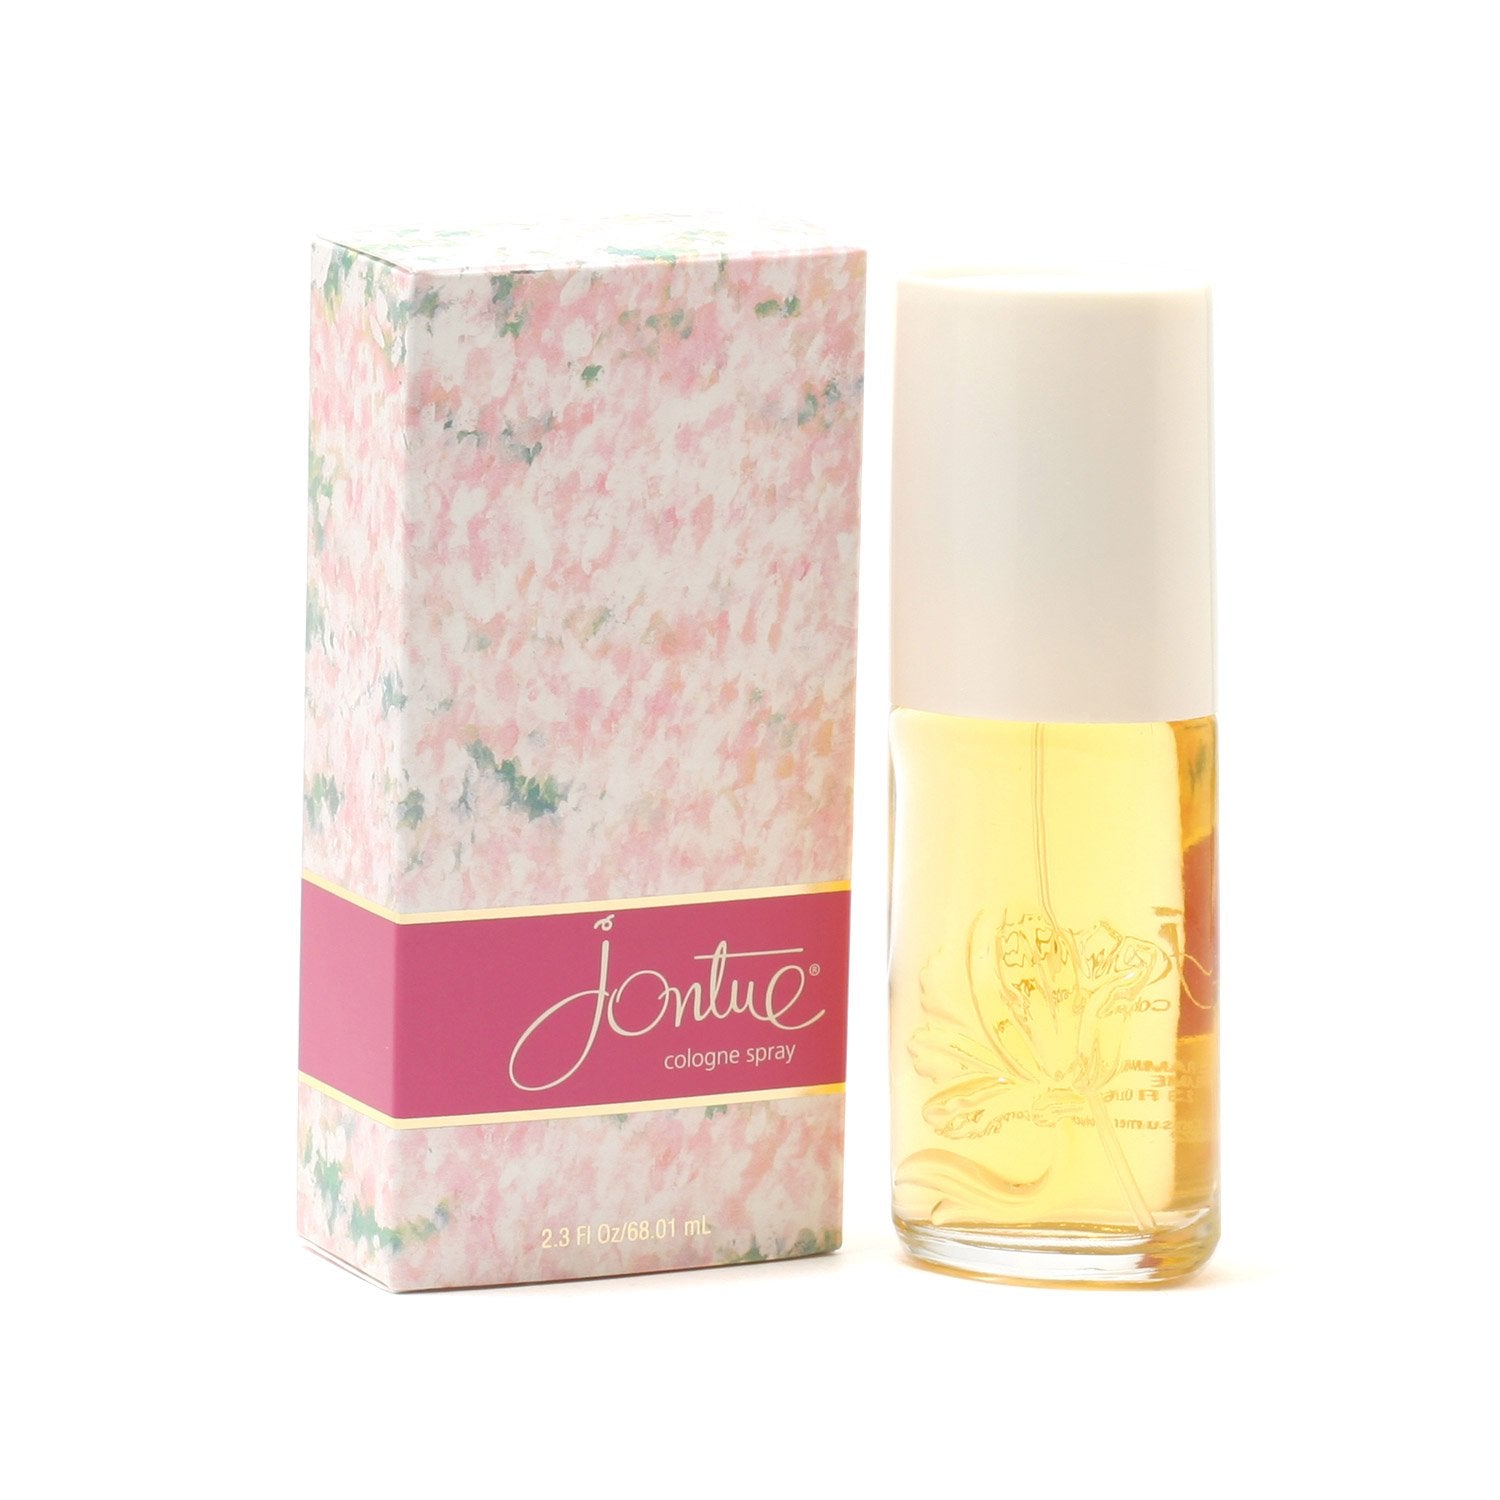 Perfume - JONTUE FOR WOMEN - COLOGNE SPRAY, 2.3 OZ